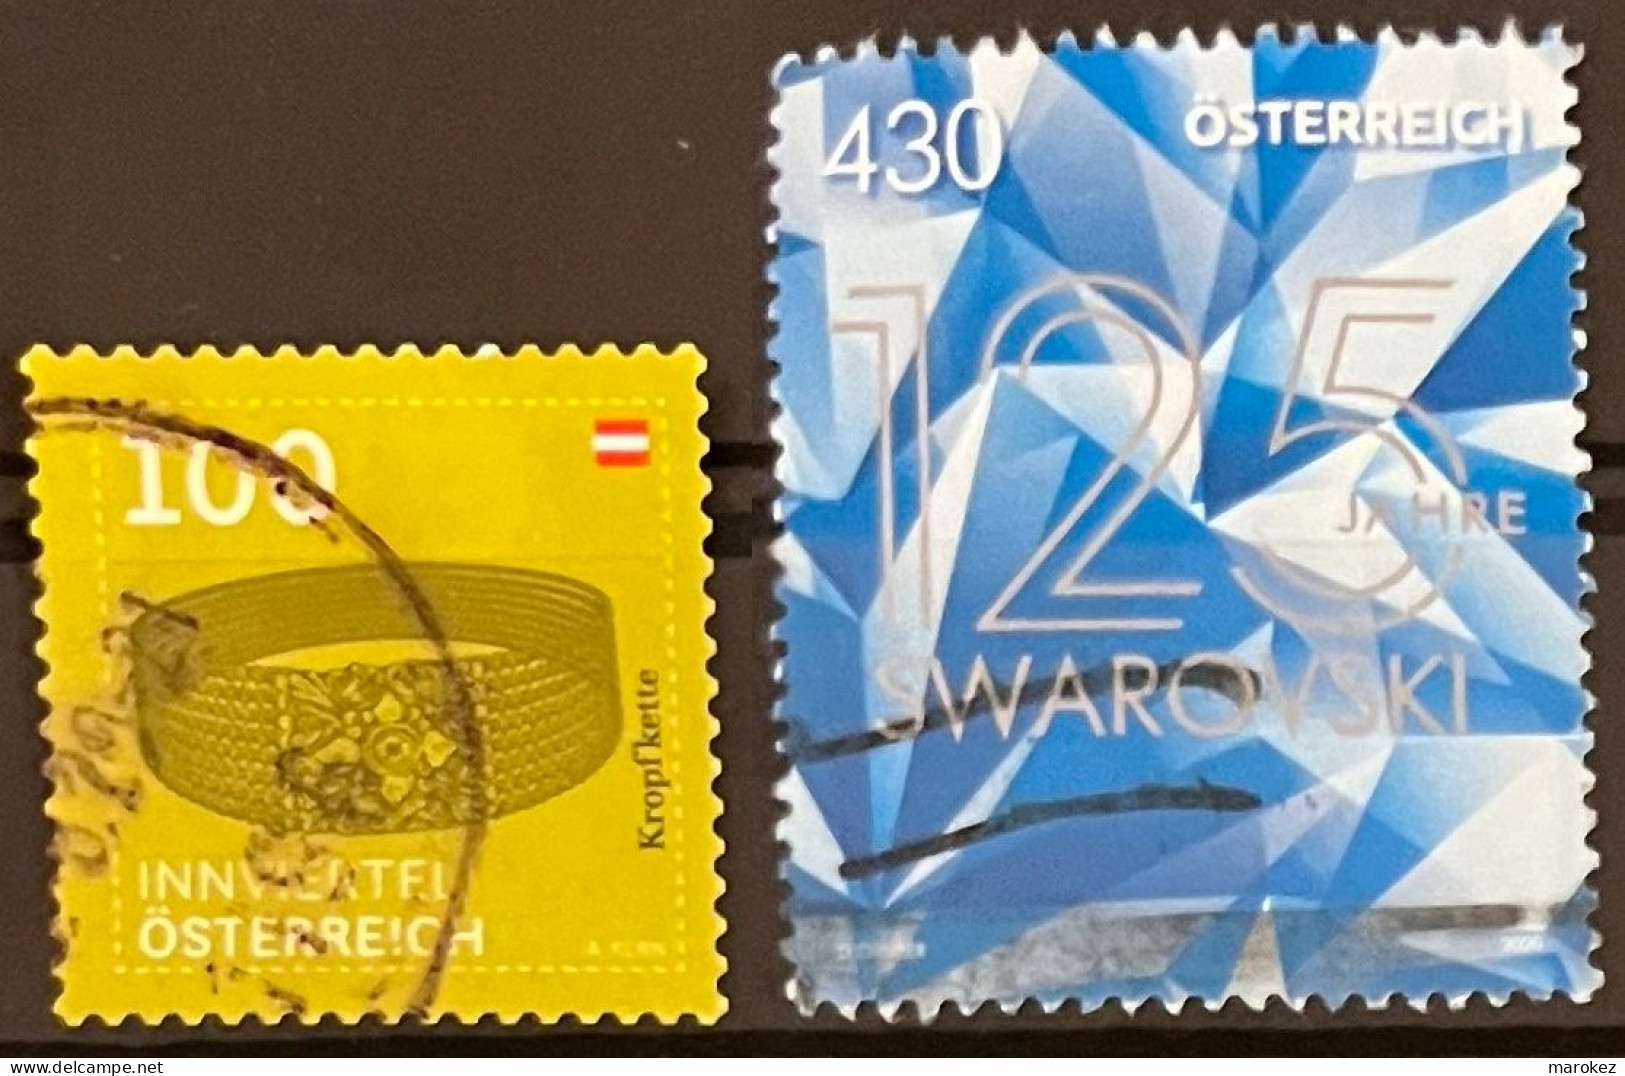 AUSTRIA 2020 Art - Goiter Chain & Swarowski Glass Cutting 2 Postally Used Stamps MICHEL # 3519,3545 - Oblitérés